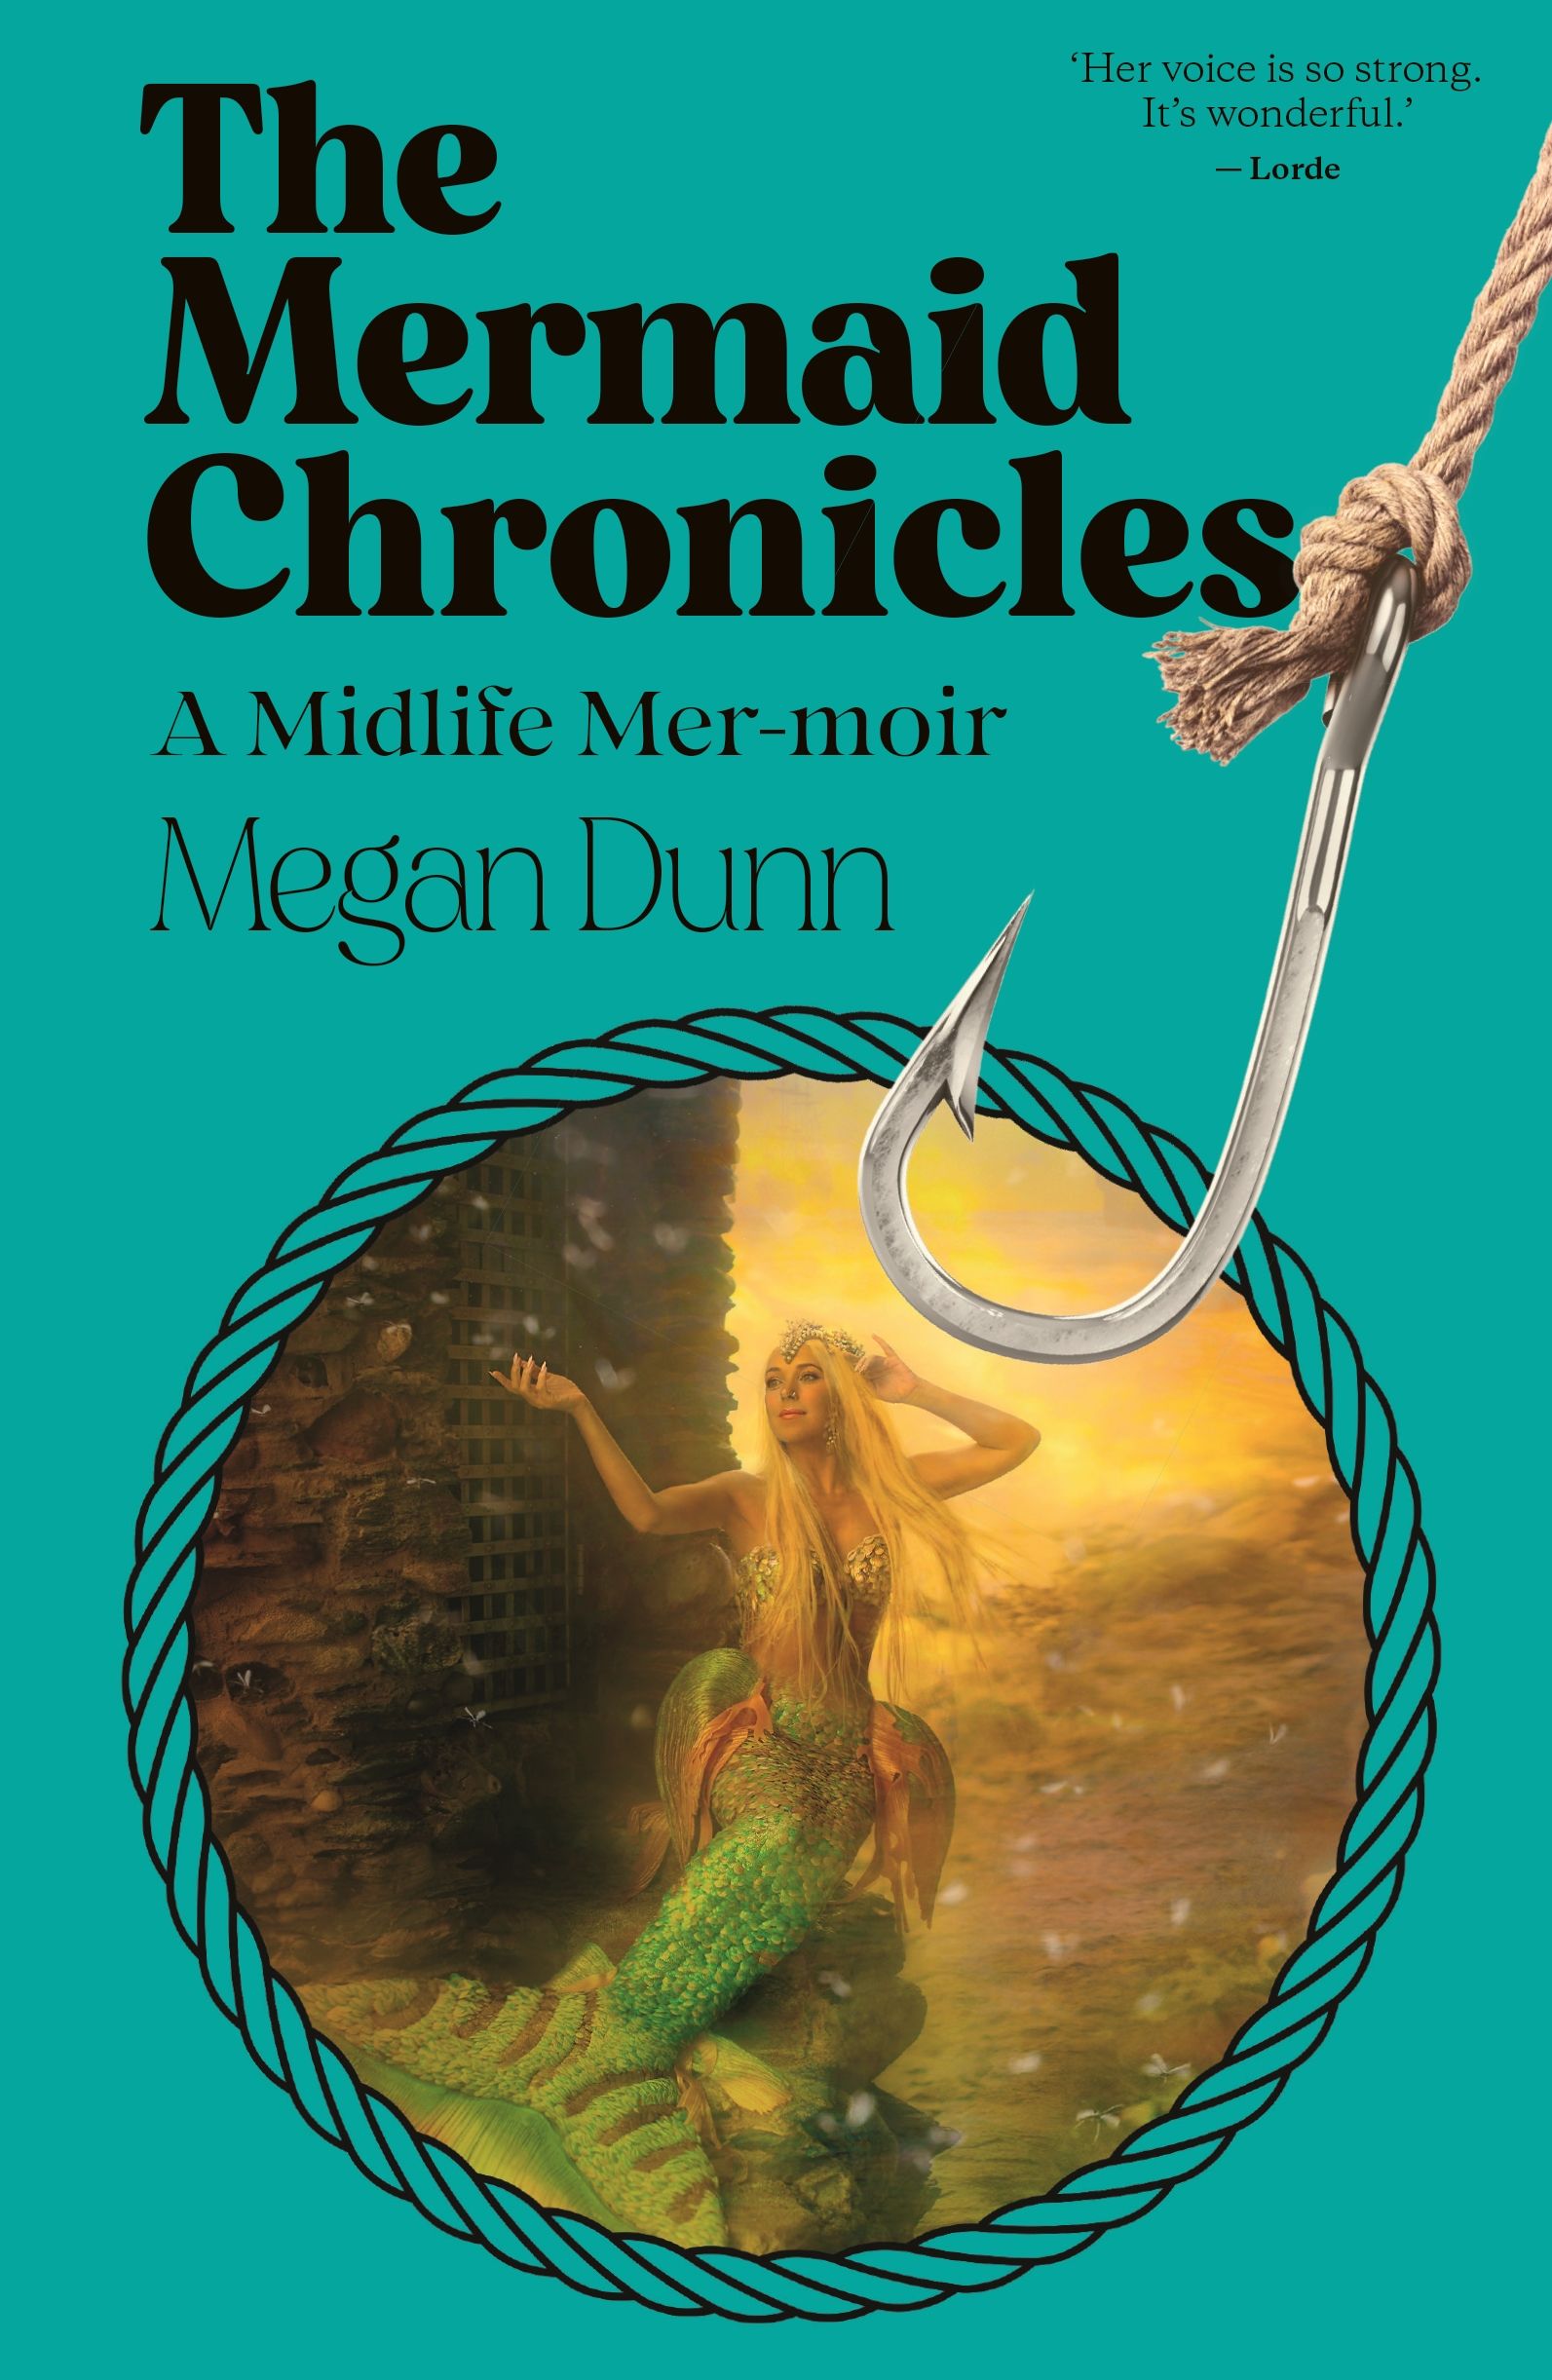 Book Launch: The Mermaid Chronicles by Megan Dunn